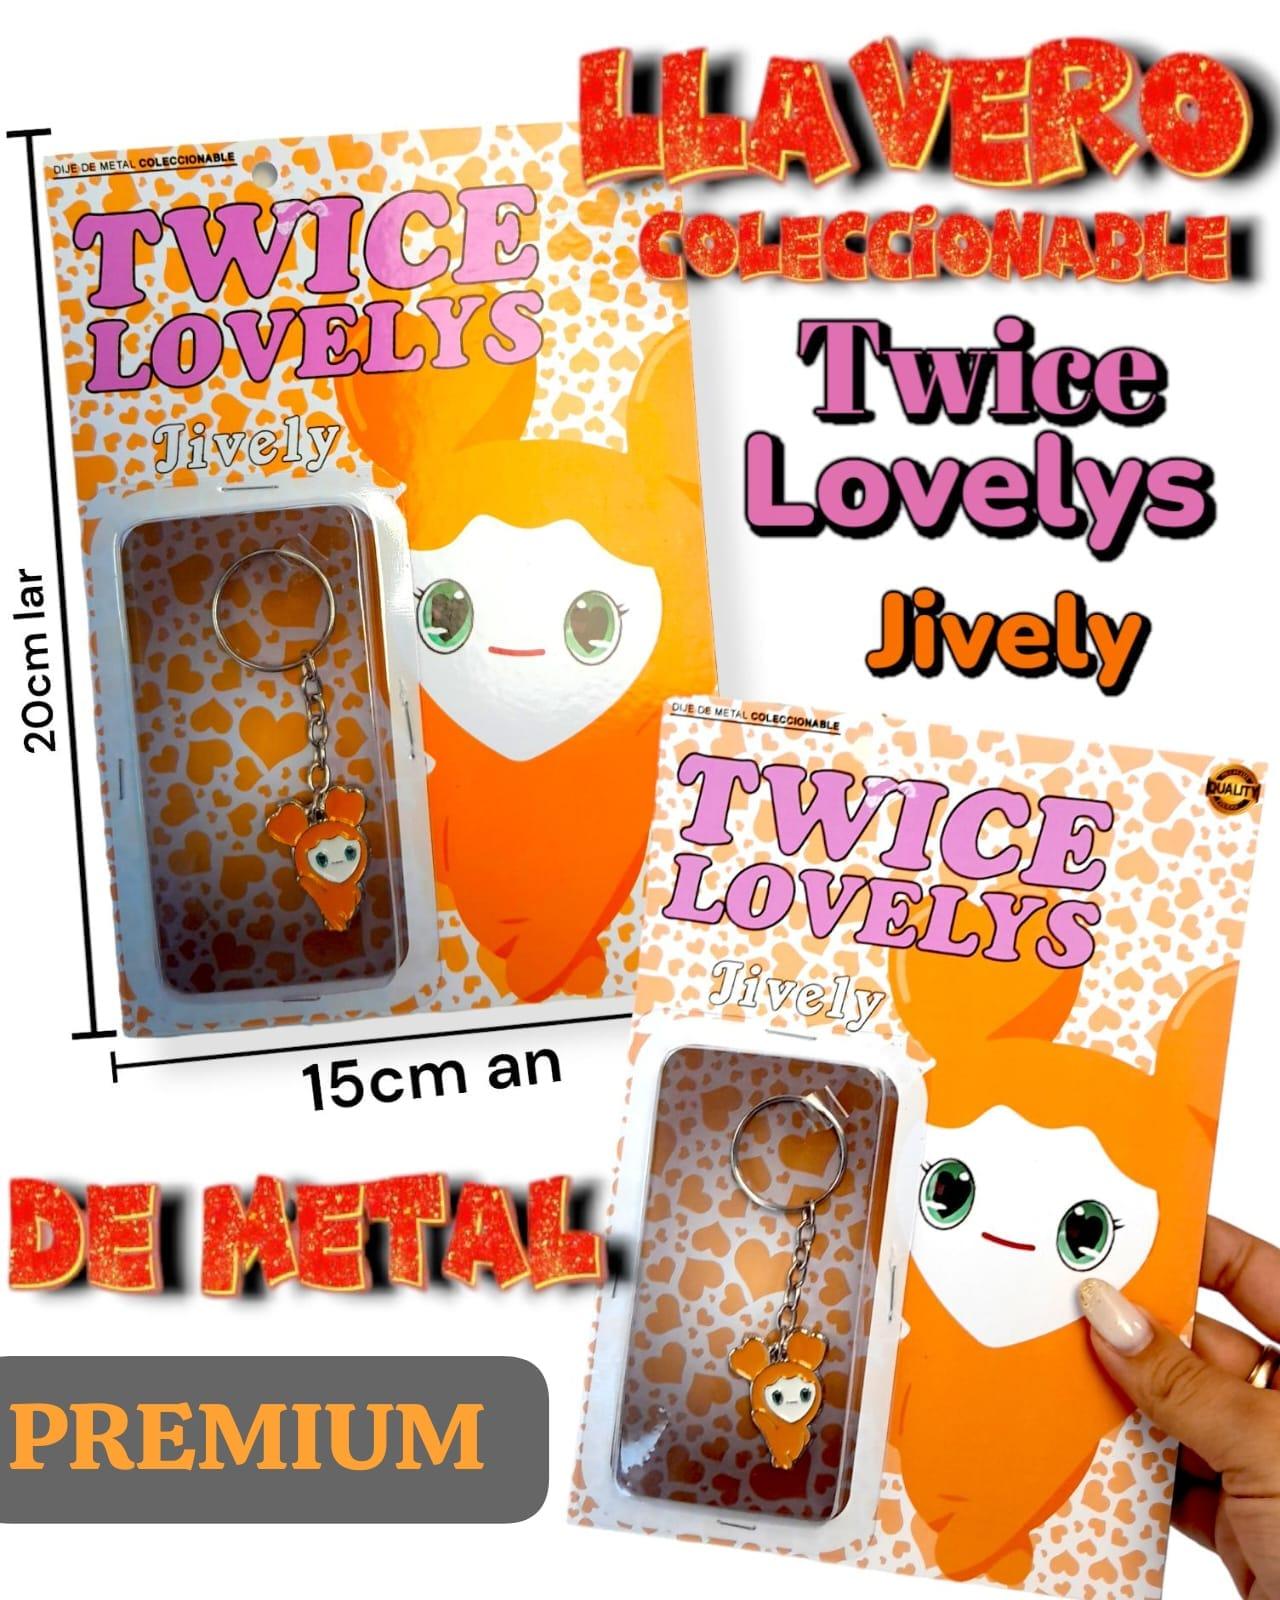 Llavero Premium Coleccionable de Mertal  Twice Lovelys (JIVELY)